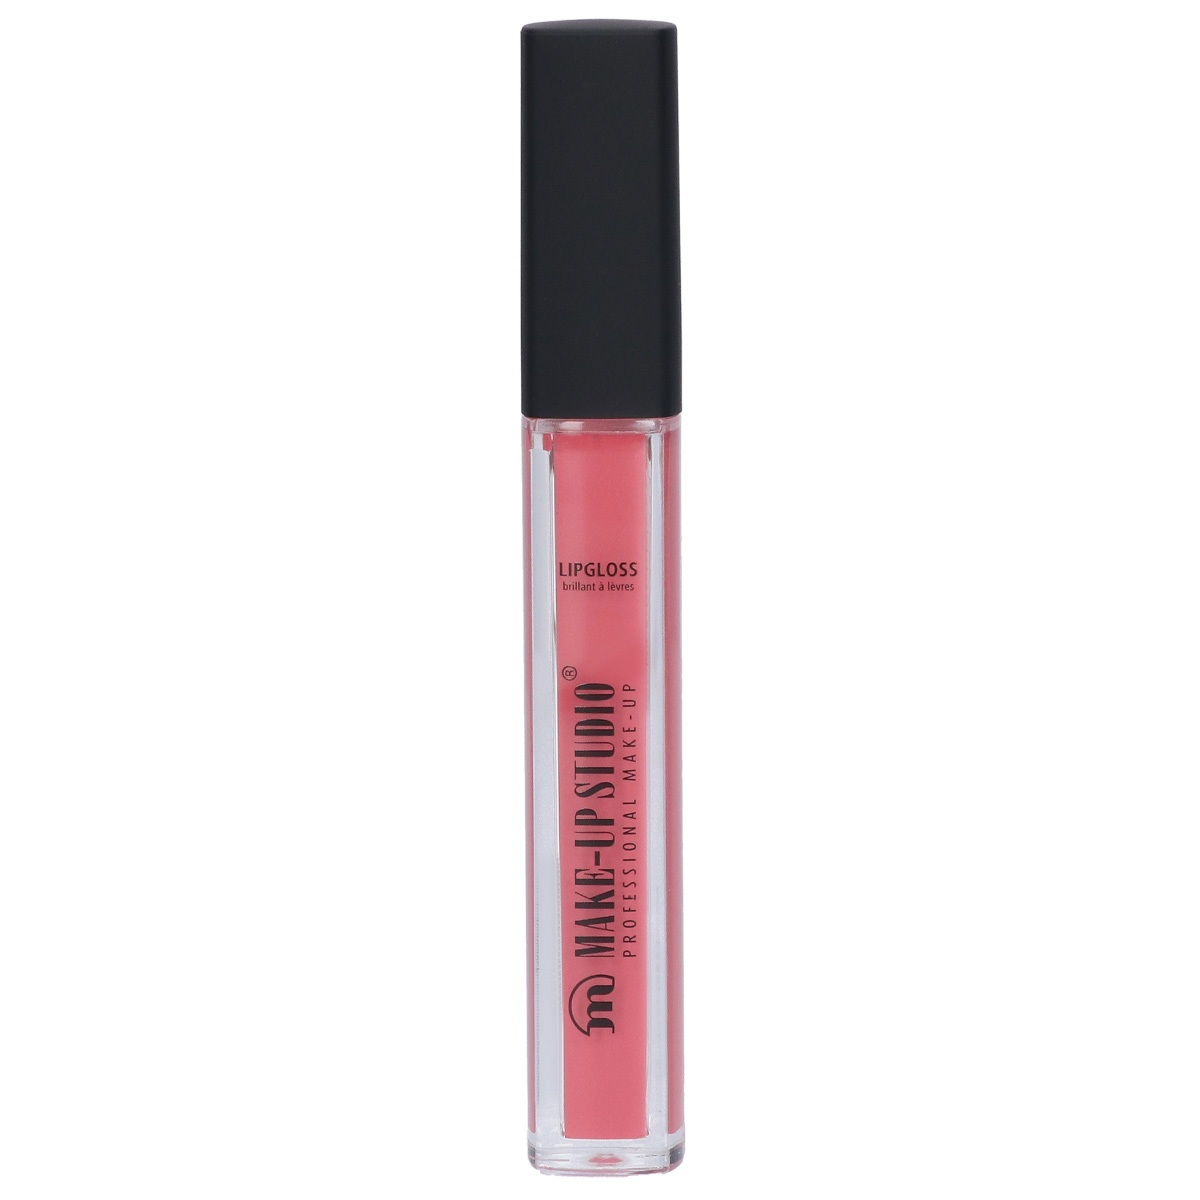 Make-up Studio Lip Gloss Paint - Pink seduction